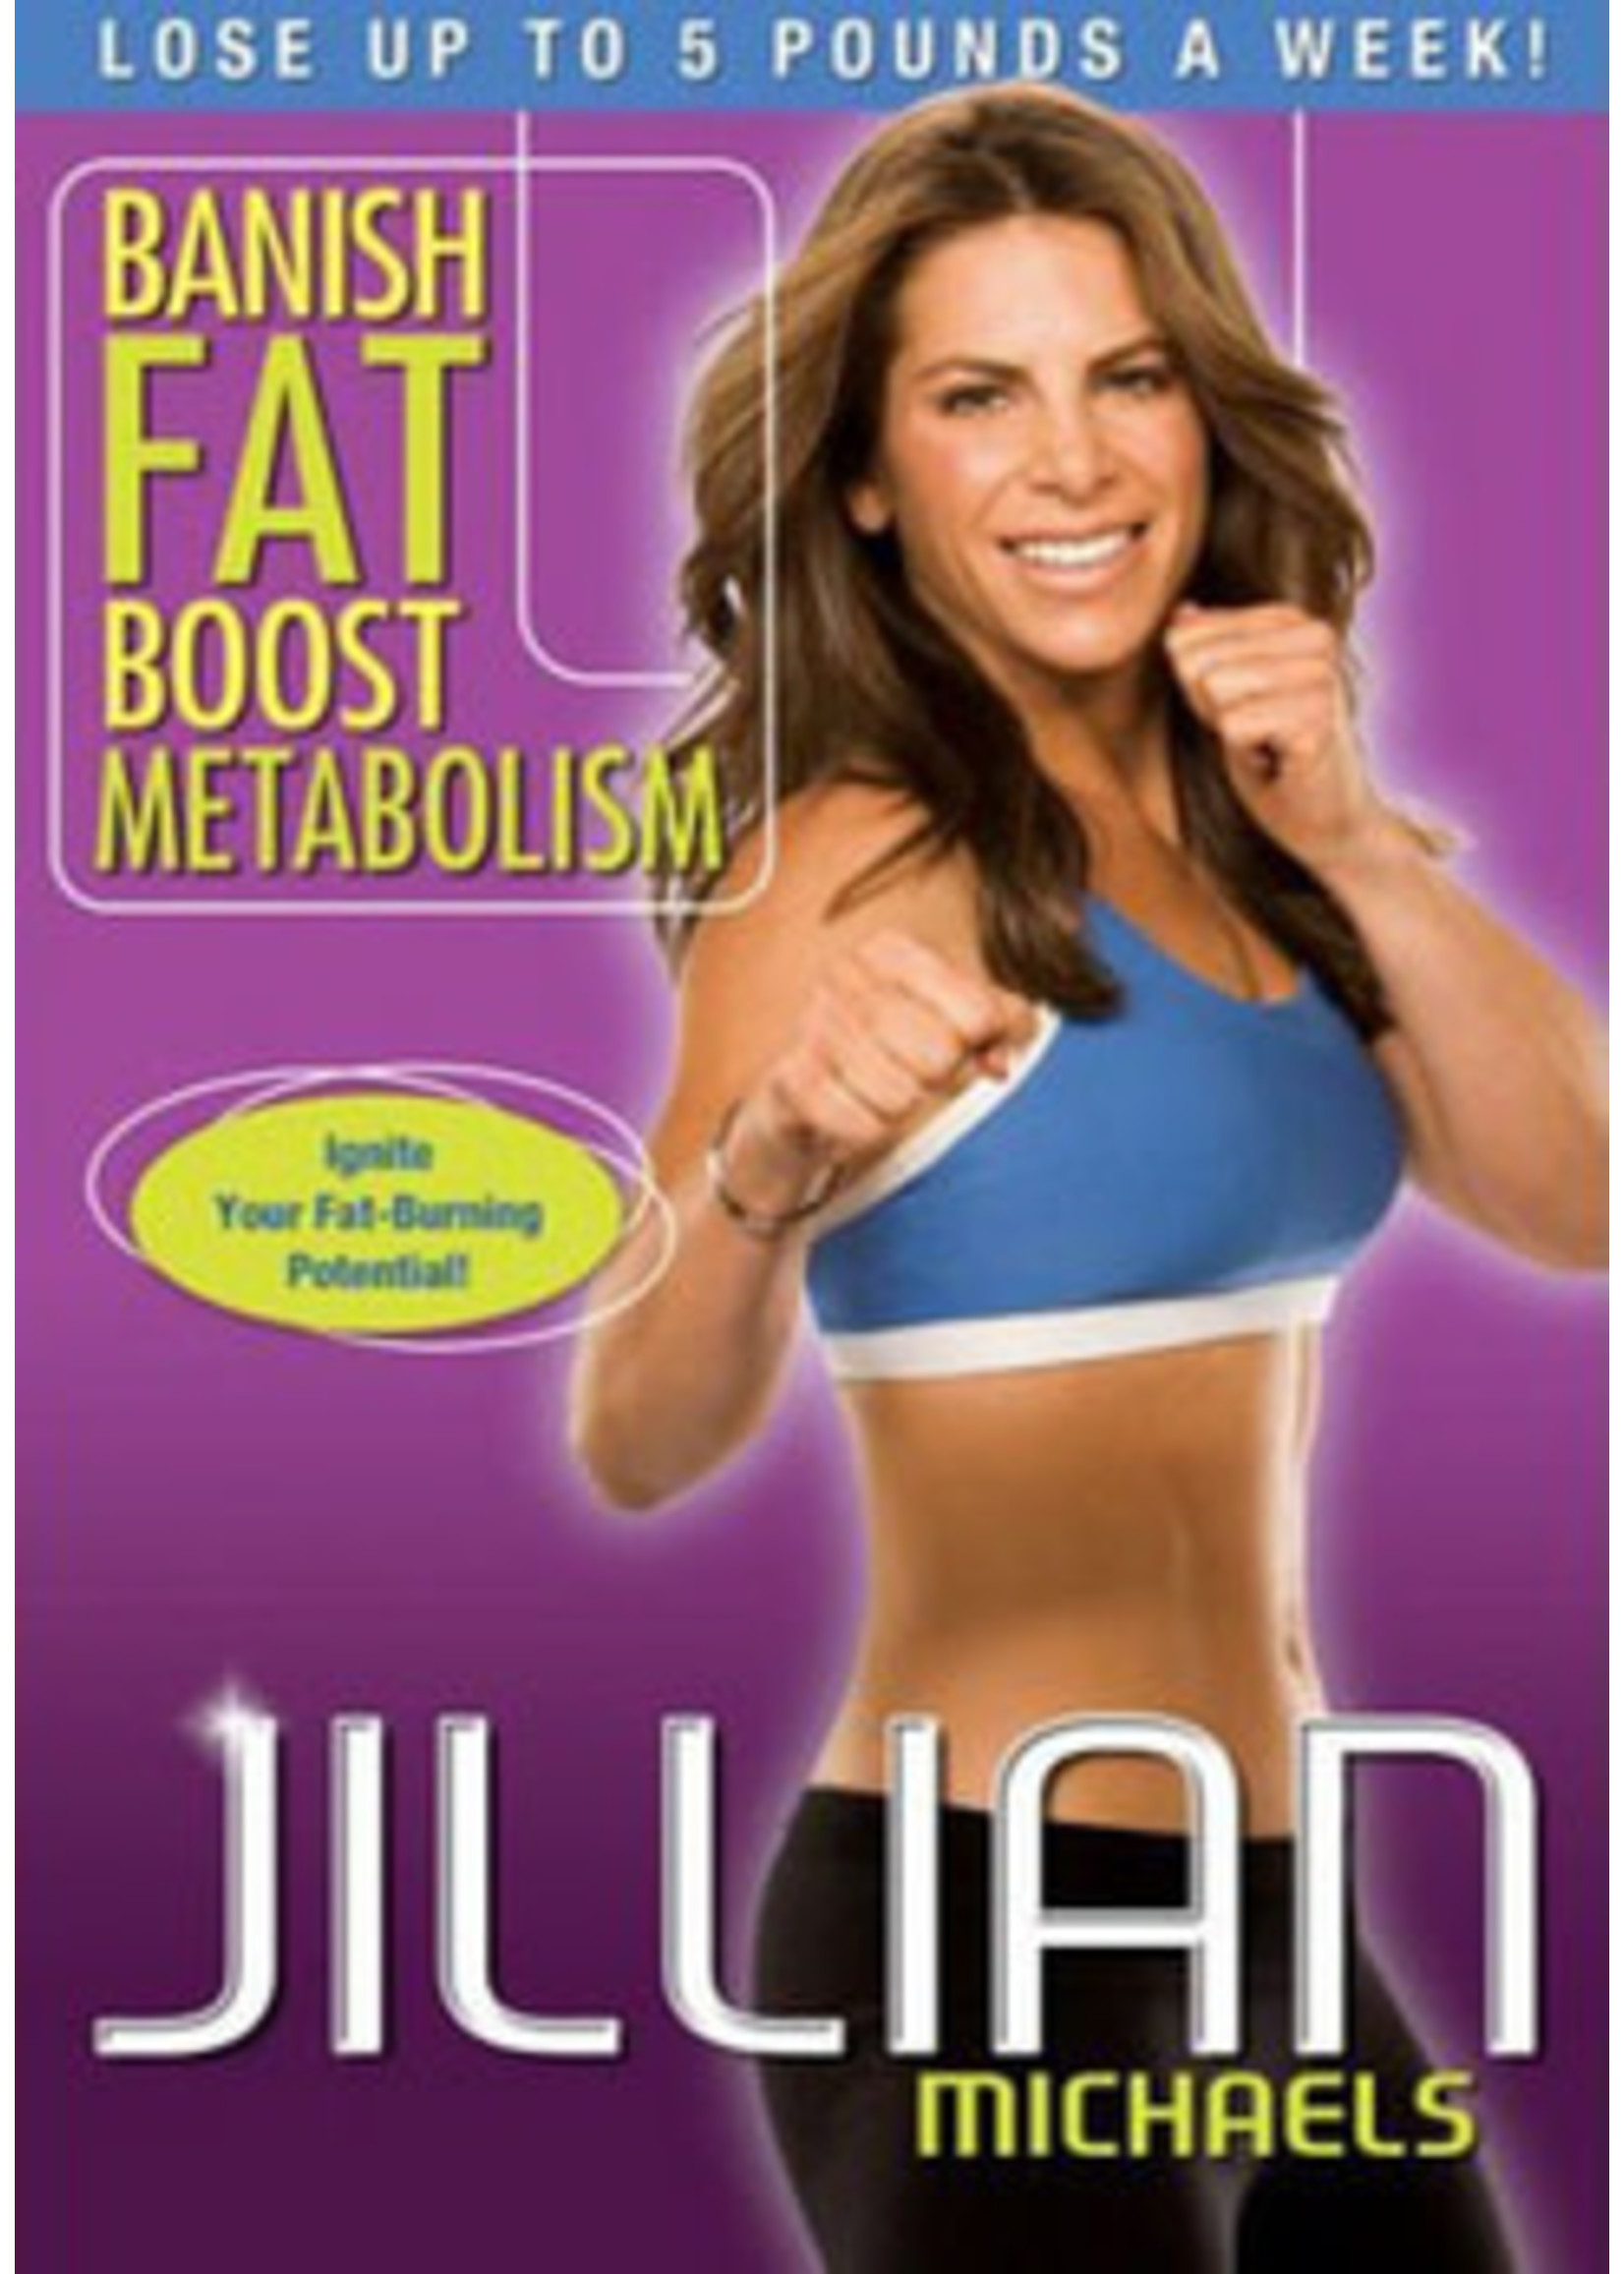 Jillian Michaels - Banish Fat Boost Metabolism DVD